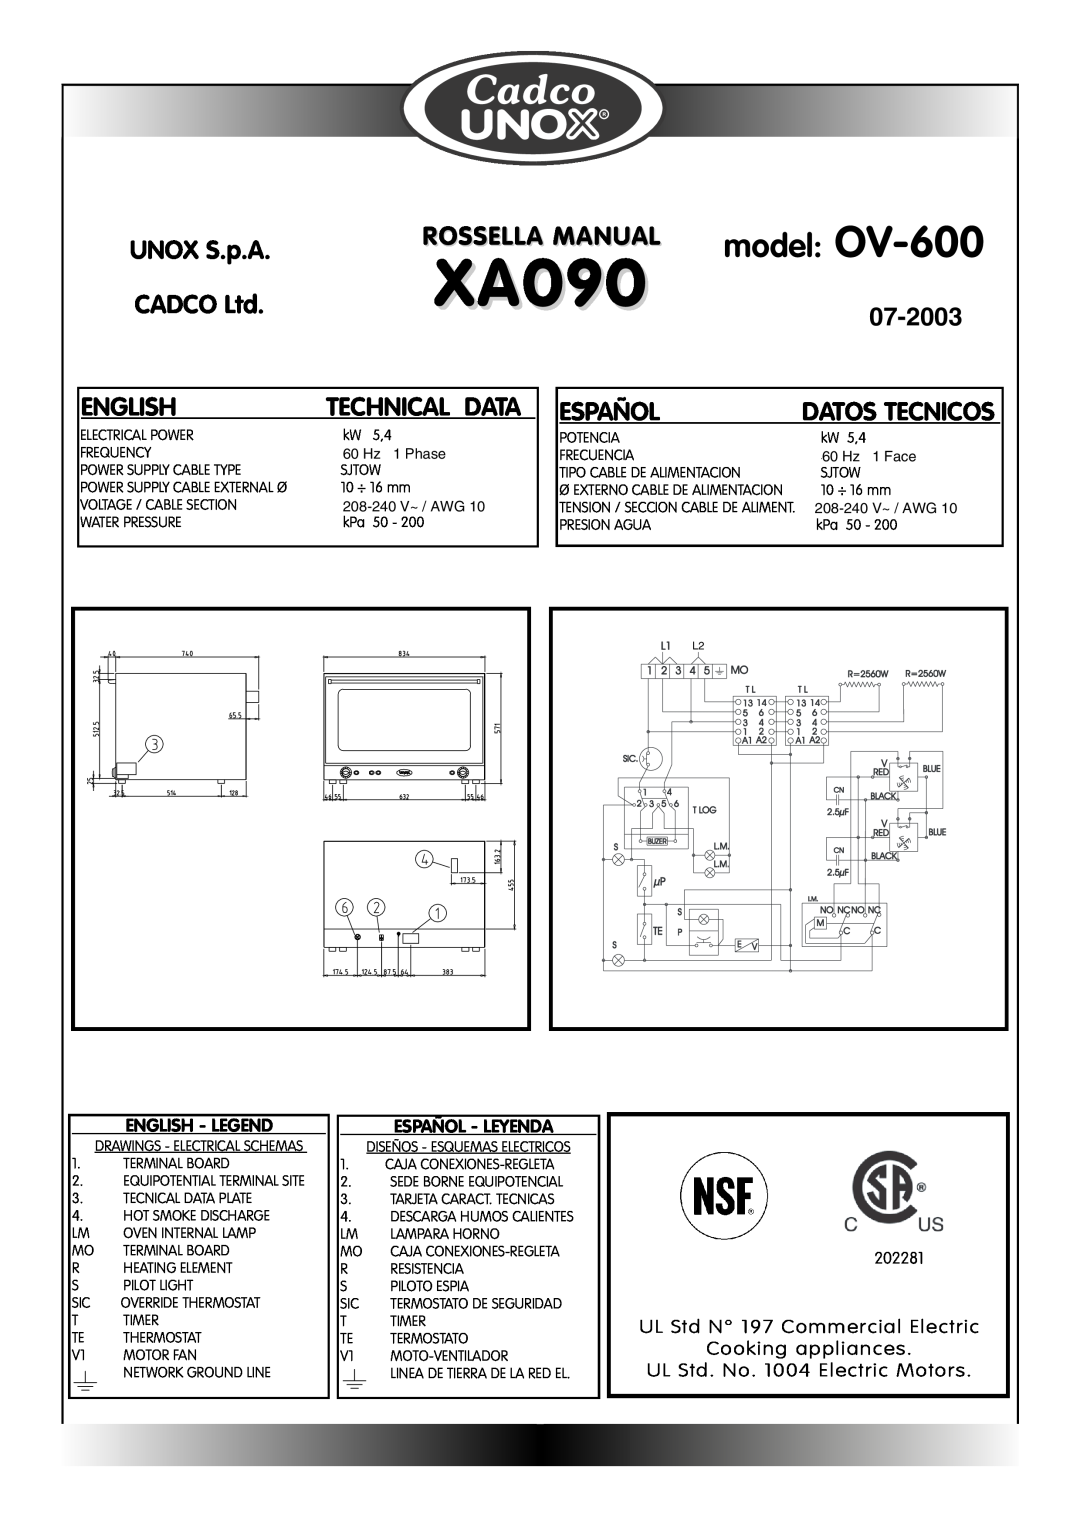 Cadco OV-400 XA090, model OV-600, UNOX S.p.A, Rossella Manual, 07-2003, English, Español, Technical Data, Datos Tecnicos 